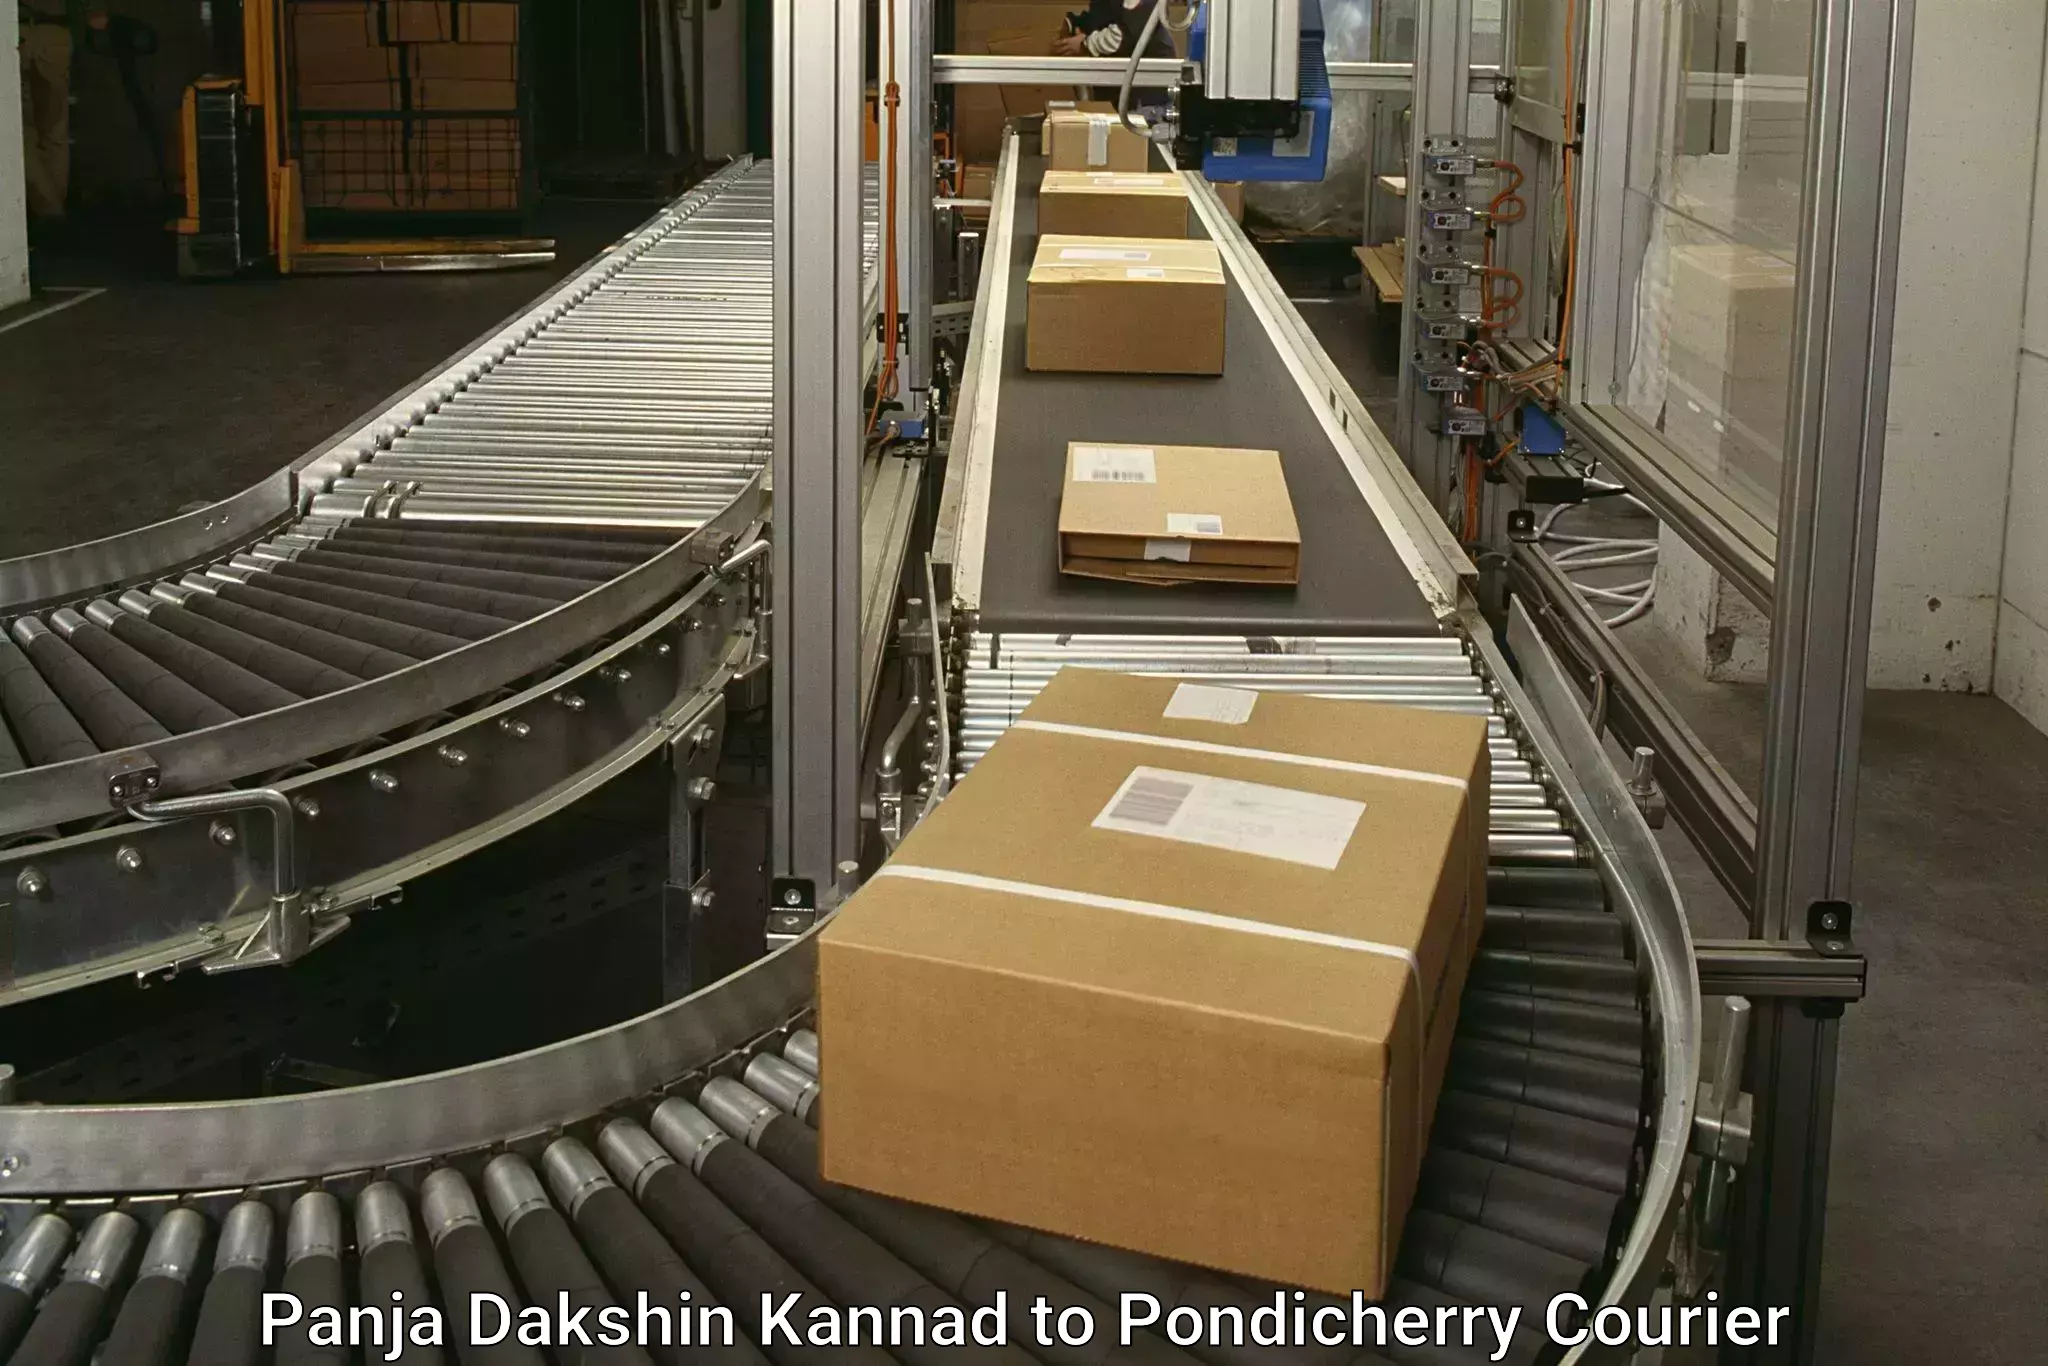 Sustainable delivery practices Panja Dakshin Kannad to Pondicherry University